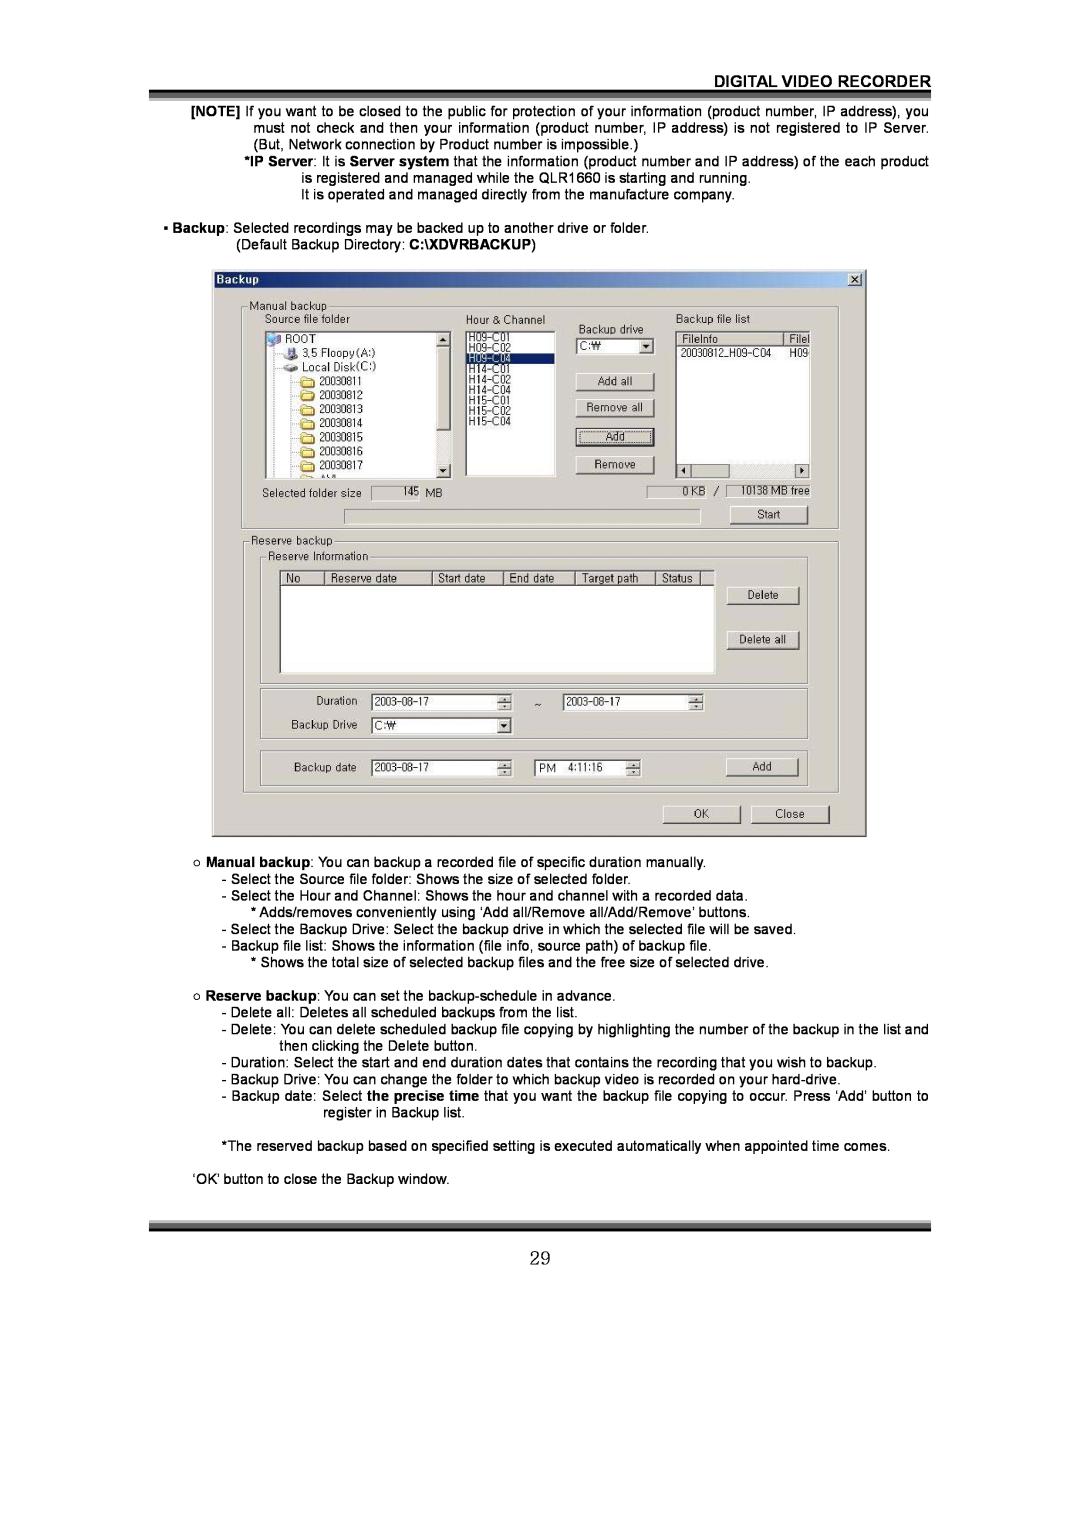 LOREX Technology QLR1660 instruction manual Digital Video Recorder, ‘OK’ button to close the Backup window 